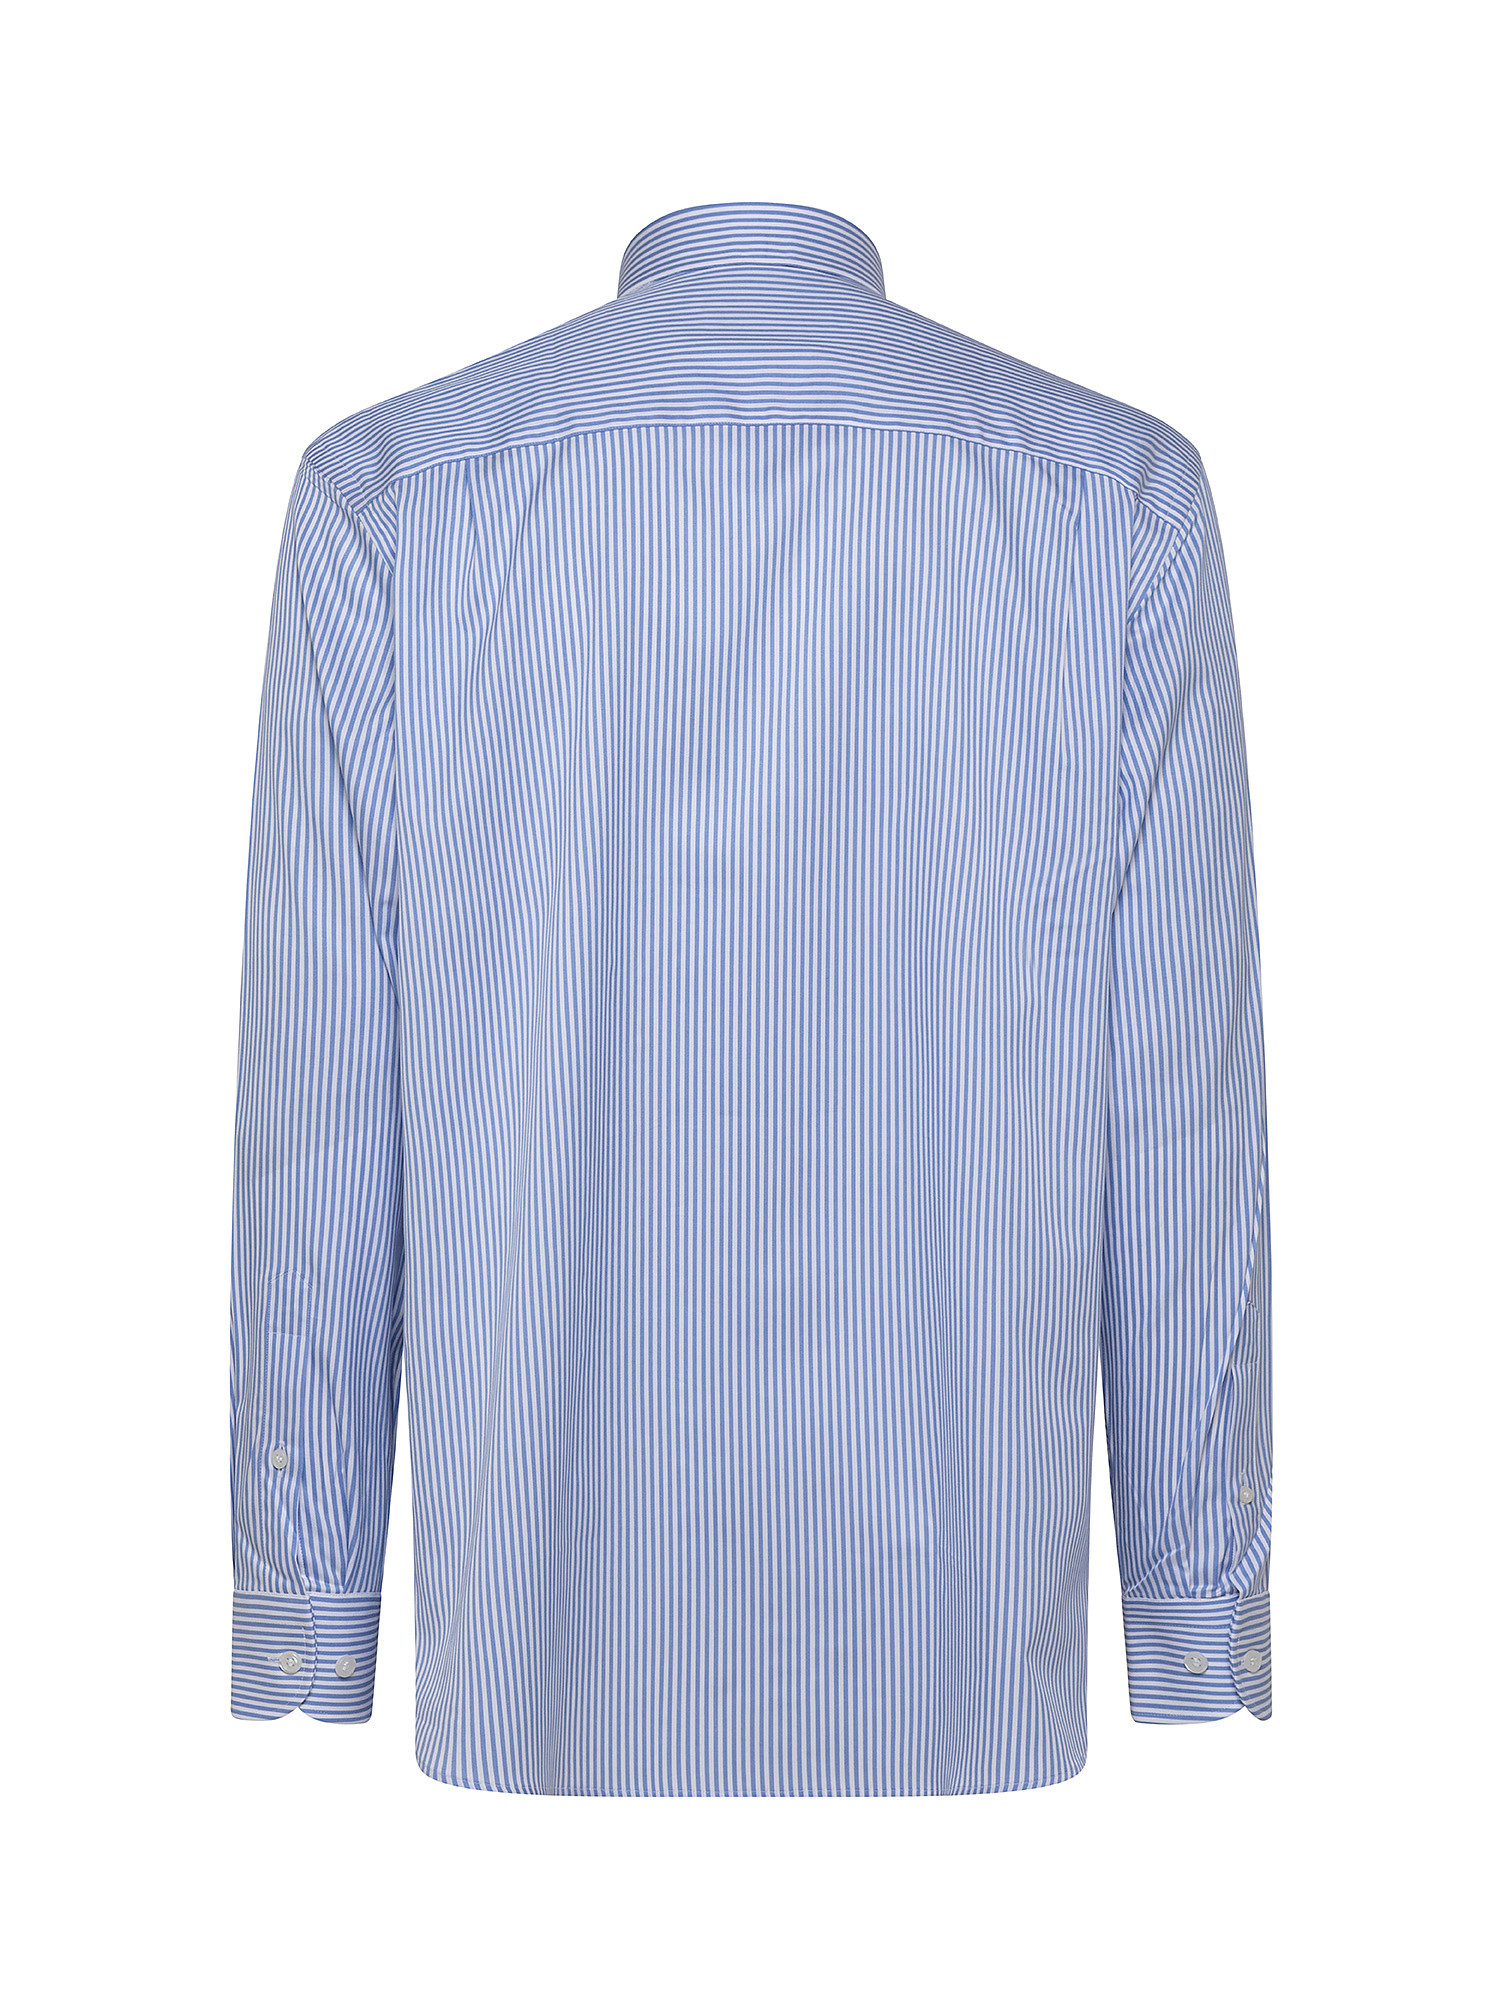 Camicia regular fit cotone popeline, Azzurro, large image number 1